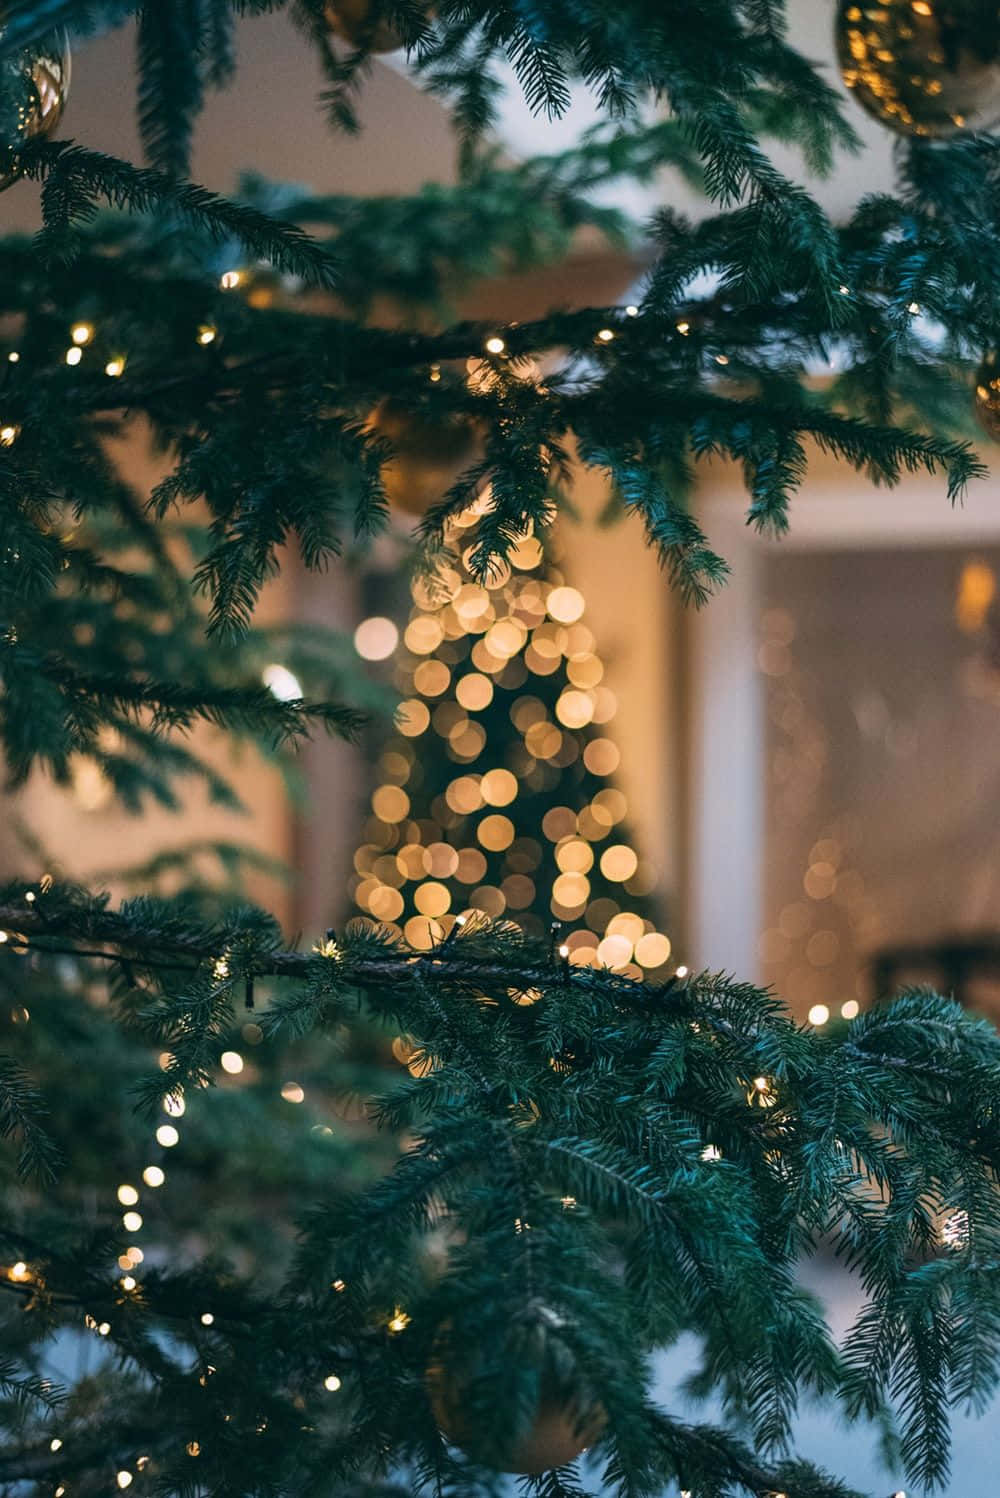 A festive Christmas tree ornament for the holiday season. Wallpaper